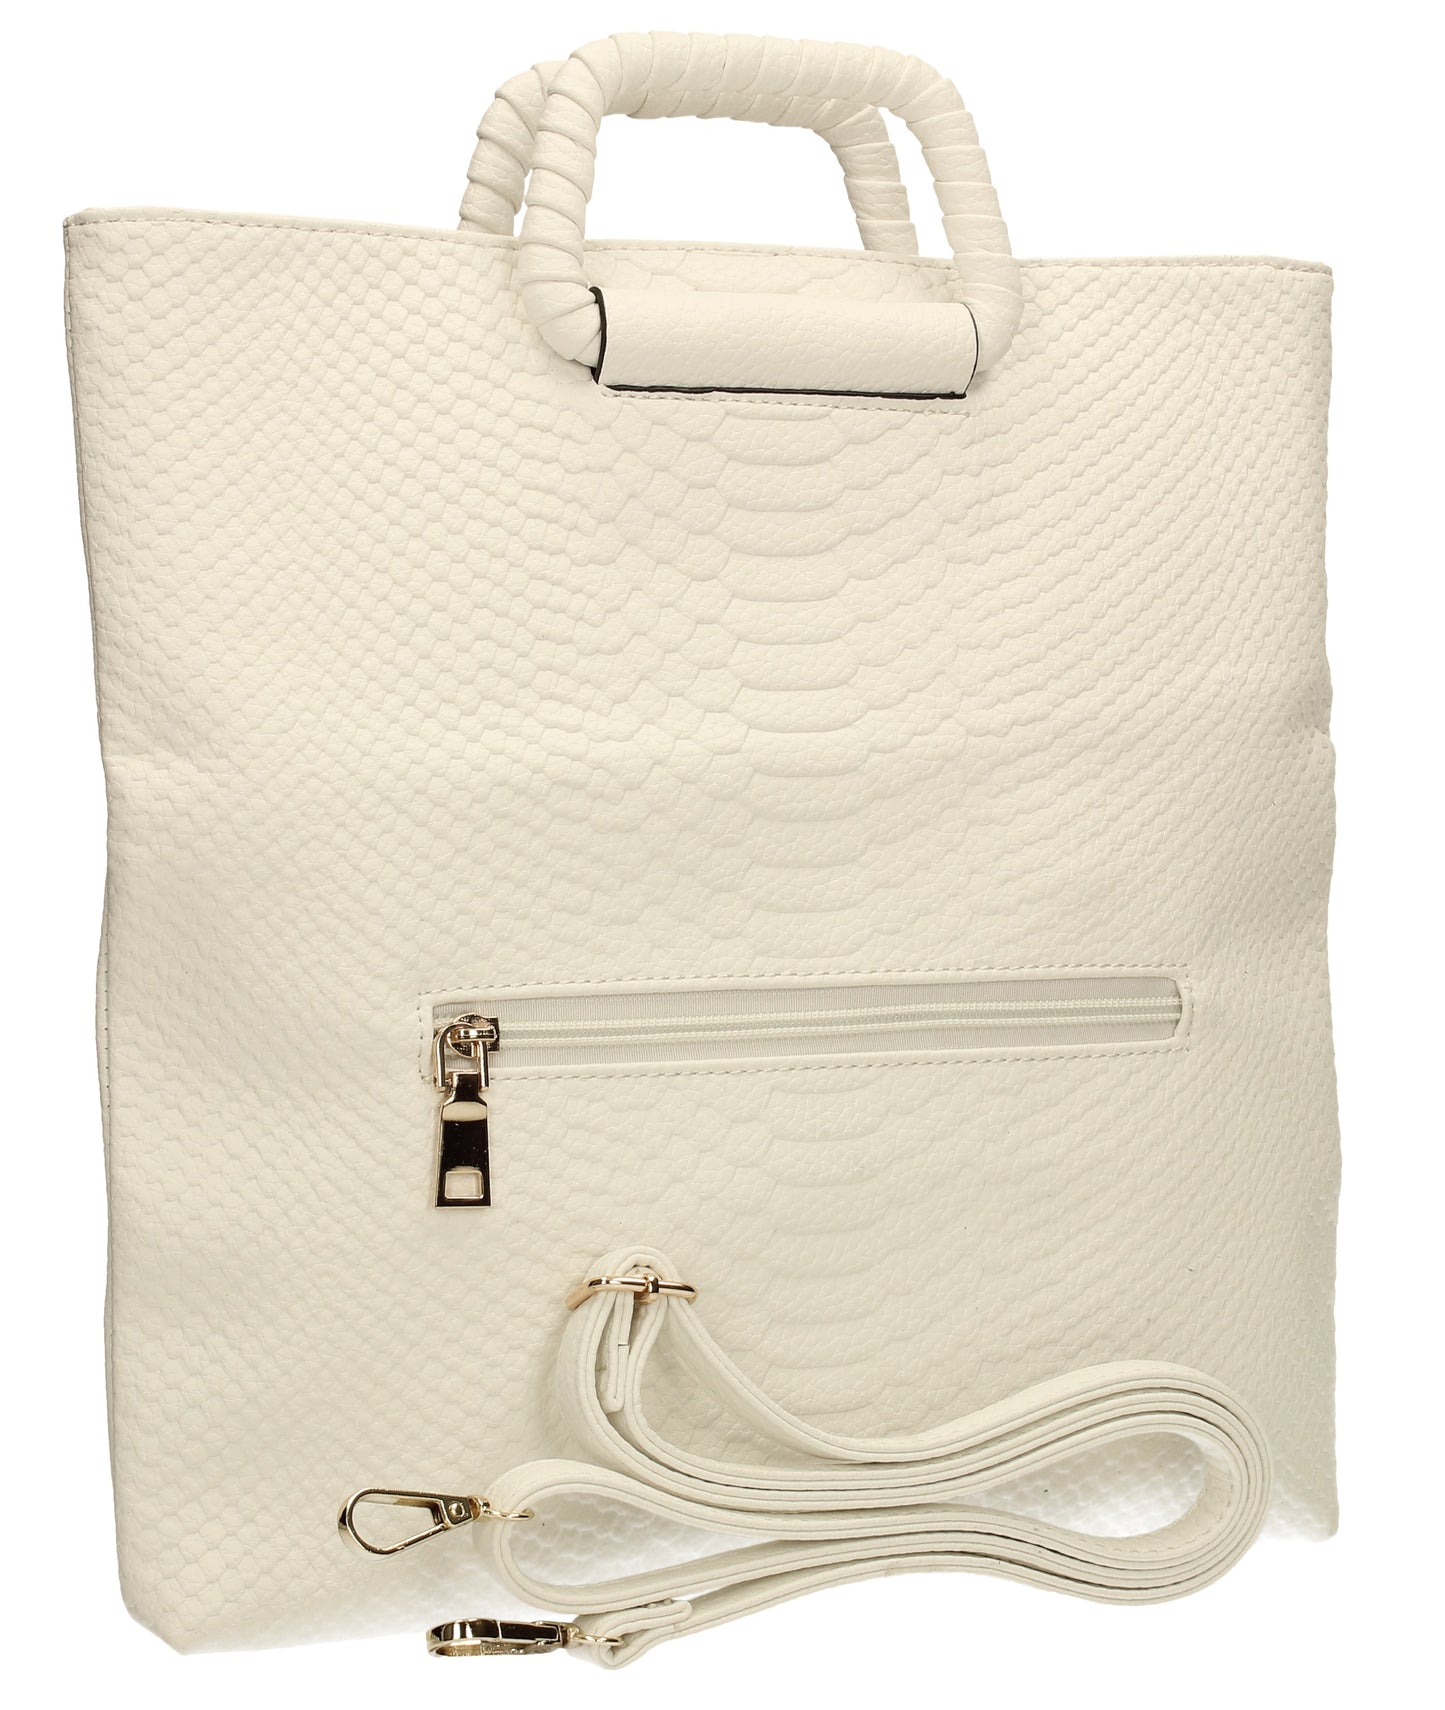 SWANKYSWANS Kara Fold Over Clutch Bag White Cute Cheap Clutch Bag For Weddings School and Work